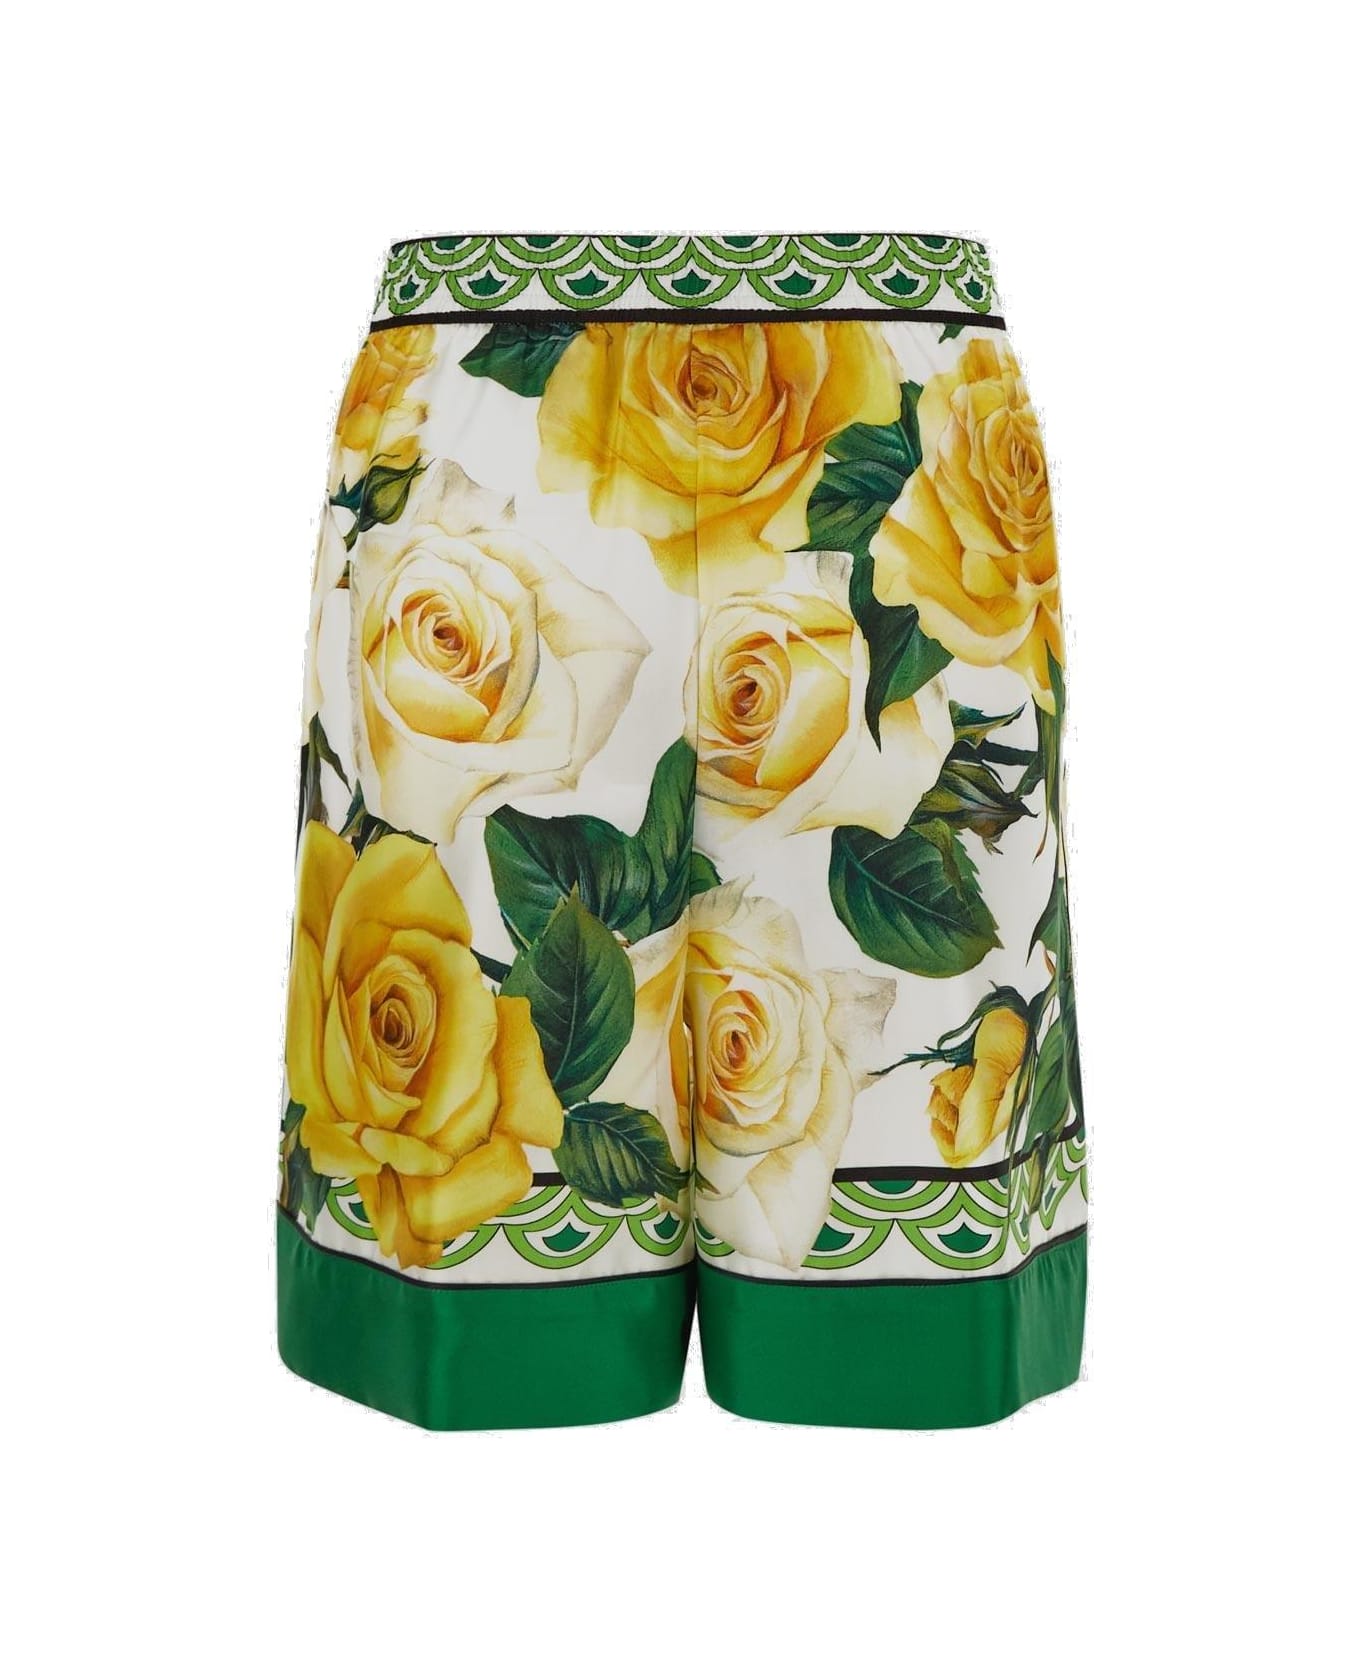 Dolce & Gabbana Floral Printed Shorts - GREEN/YELLOW